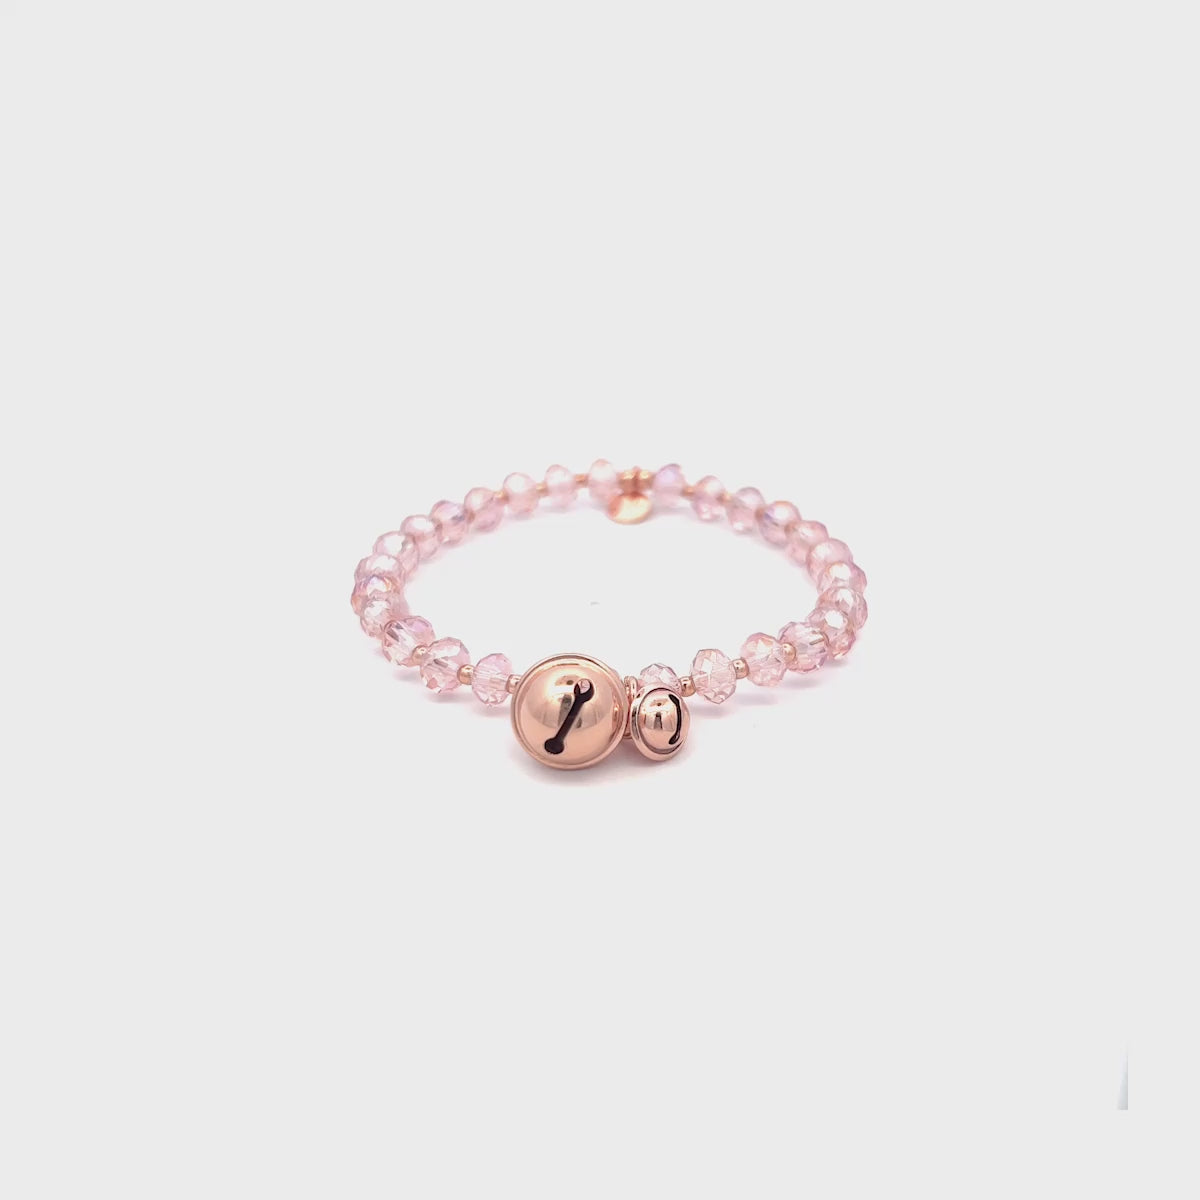 Bracelets - Elastic bracelet pink crystals and bells - Crystal Rainbow  - thumbnail - video - 1 | Rue des Mille